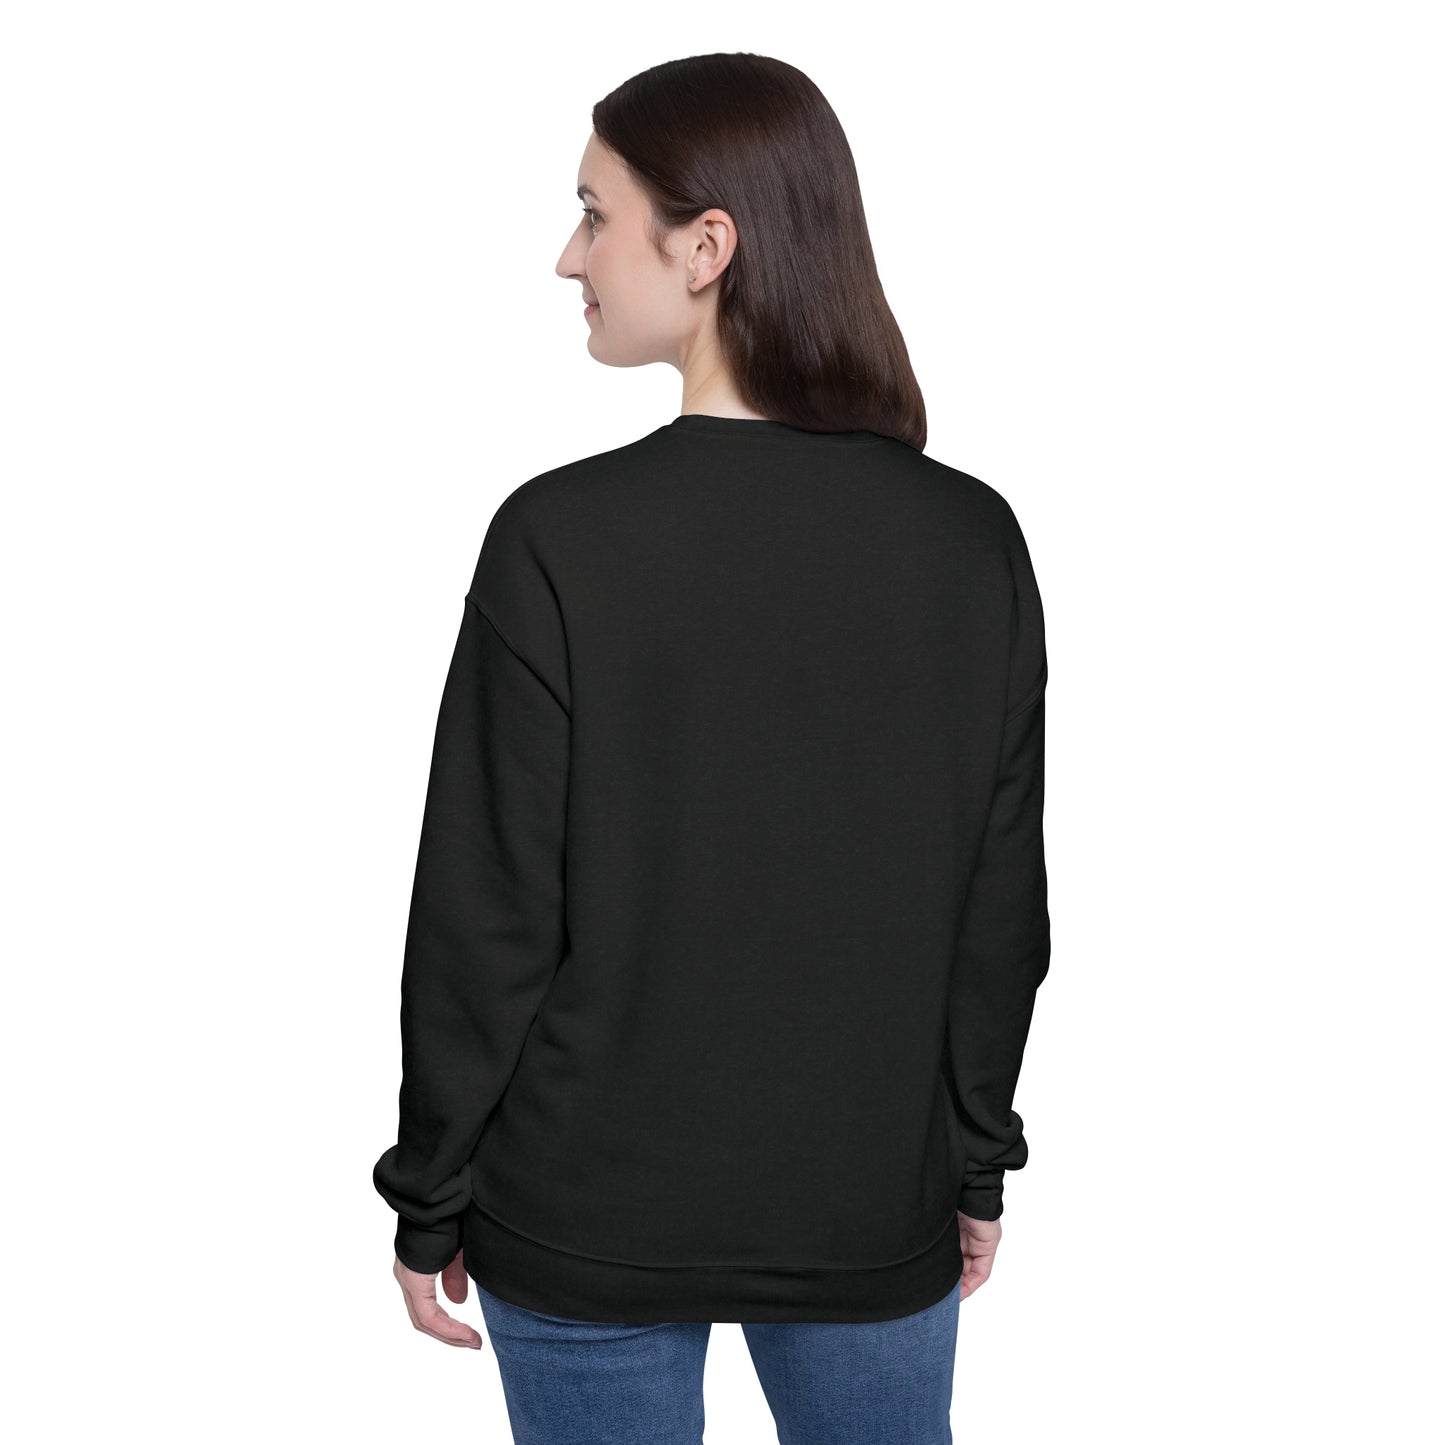 Black long sleeve shirt with Logo on the left Chest• შავი გრძელმკლავიანი მაისური მარცხნივ ლოგოთი (UNISEX)